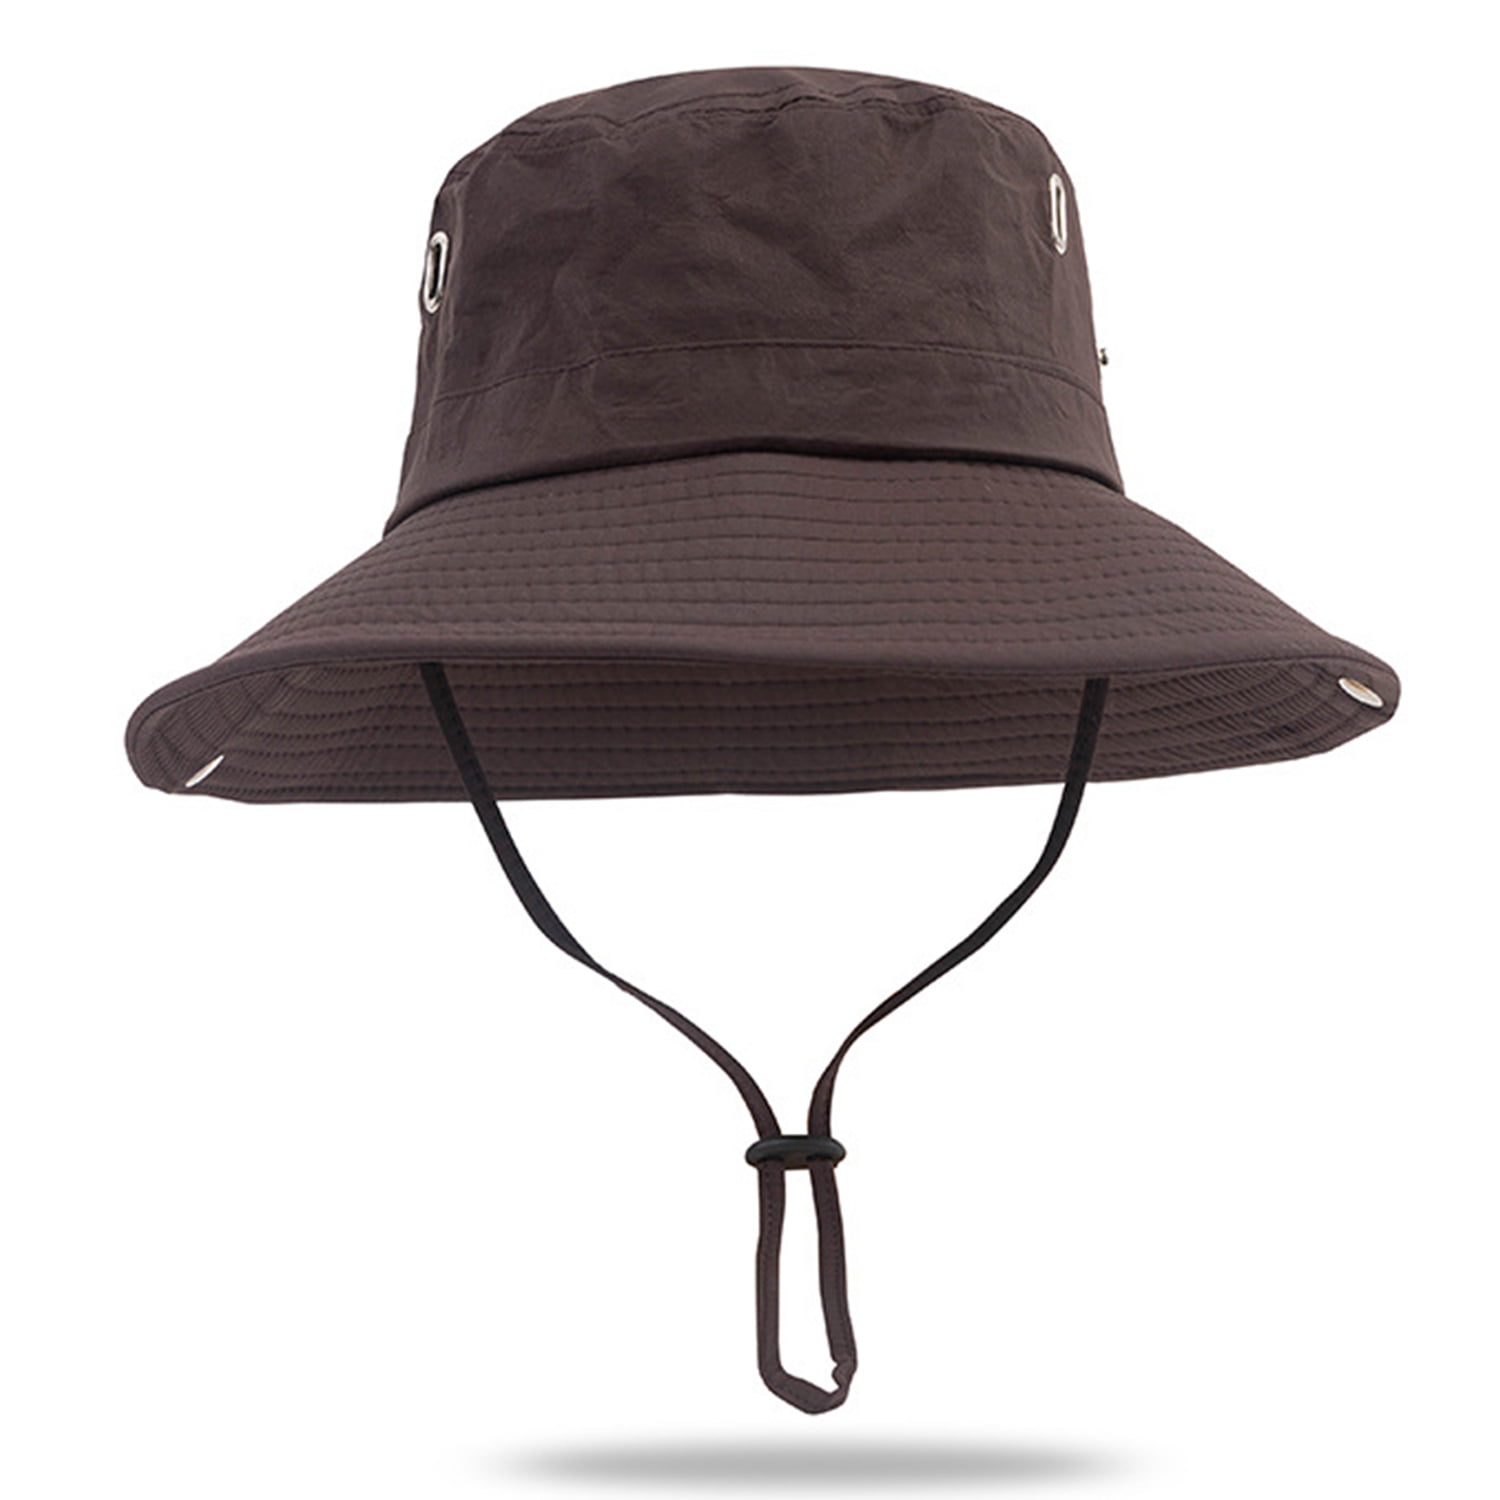 Yuanbang Waterproof Wide Brim Hat UPF 50+,Sun Hat for Men Women, adult Unisex, Size: One size, Black